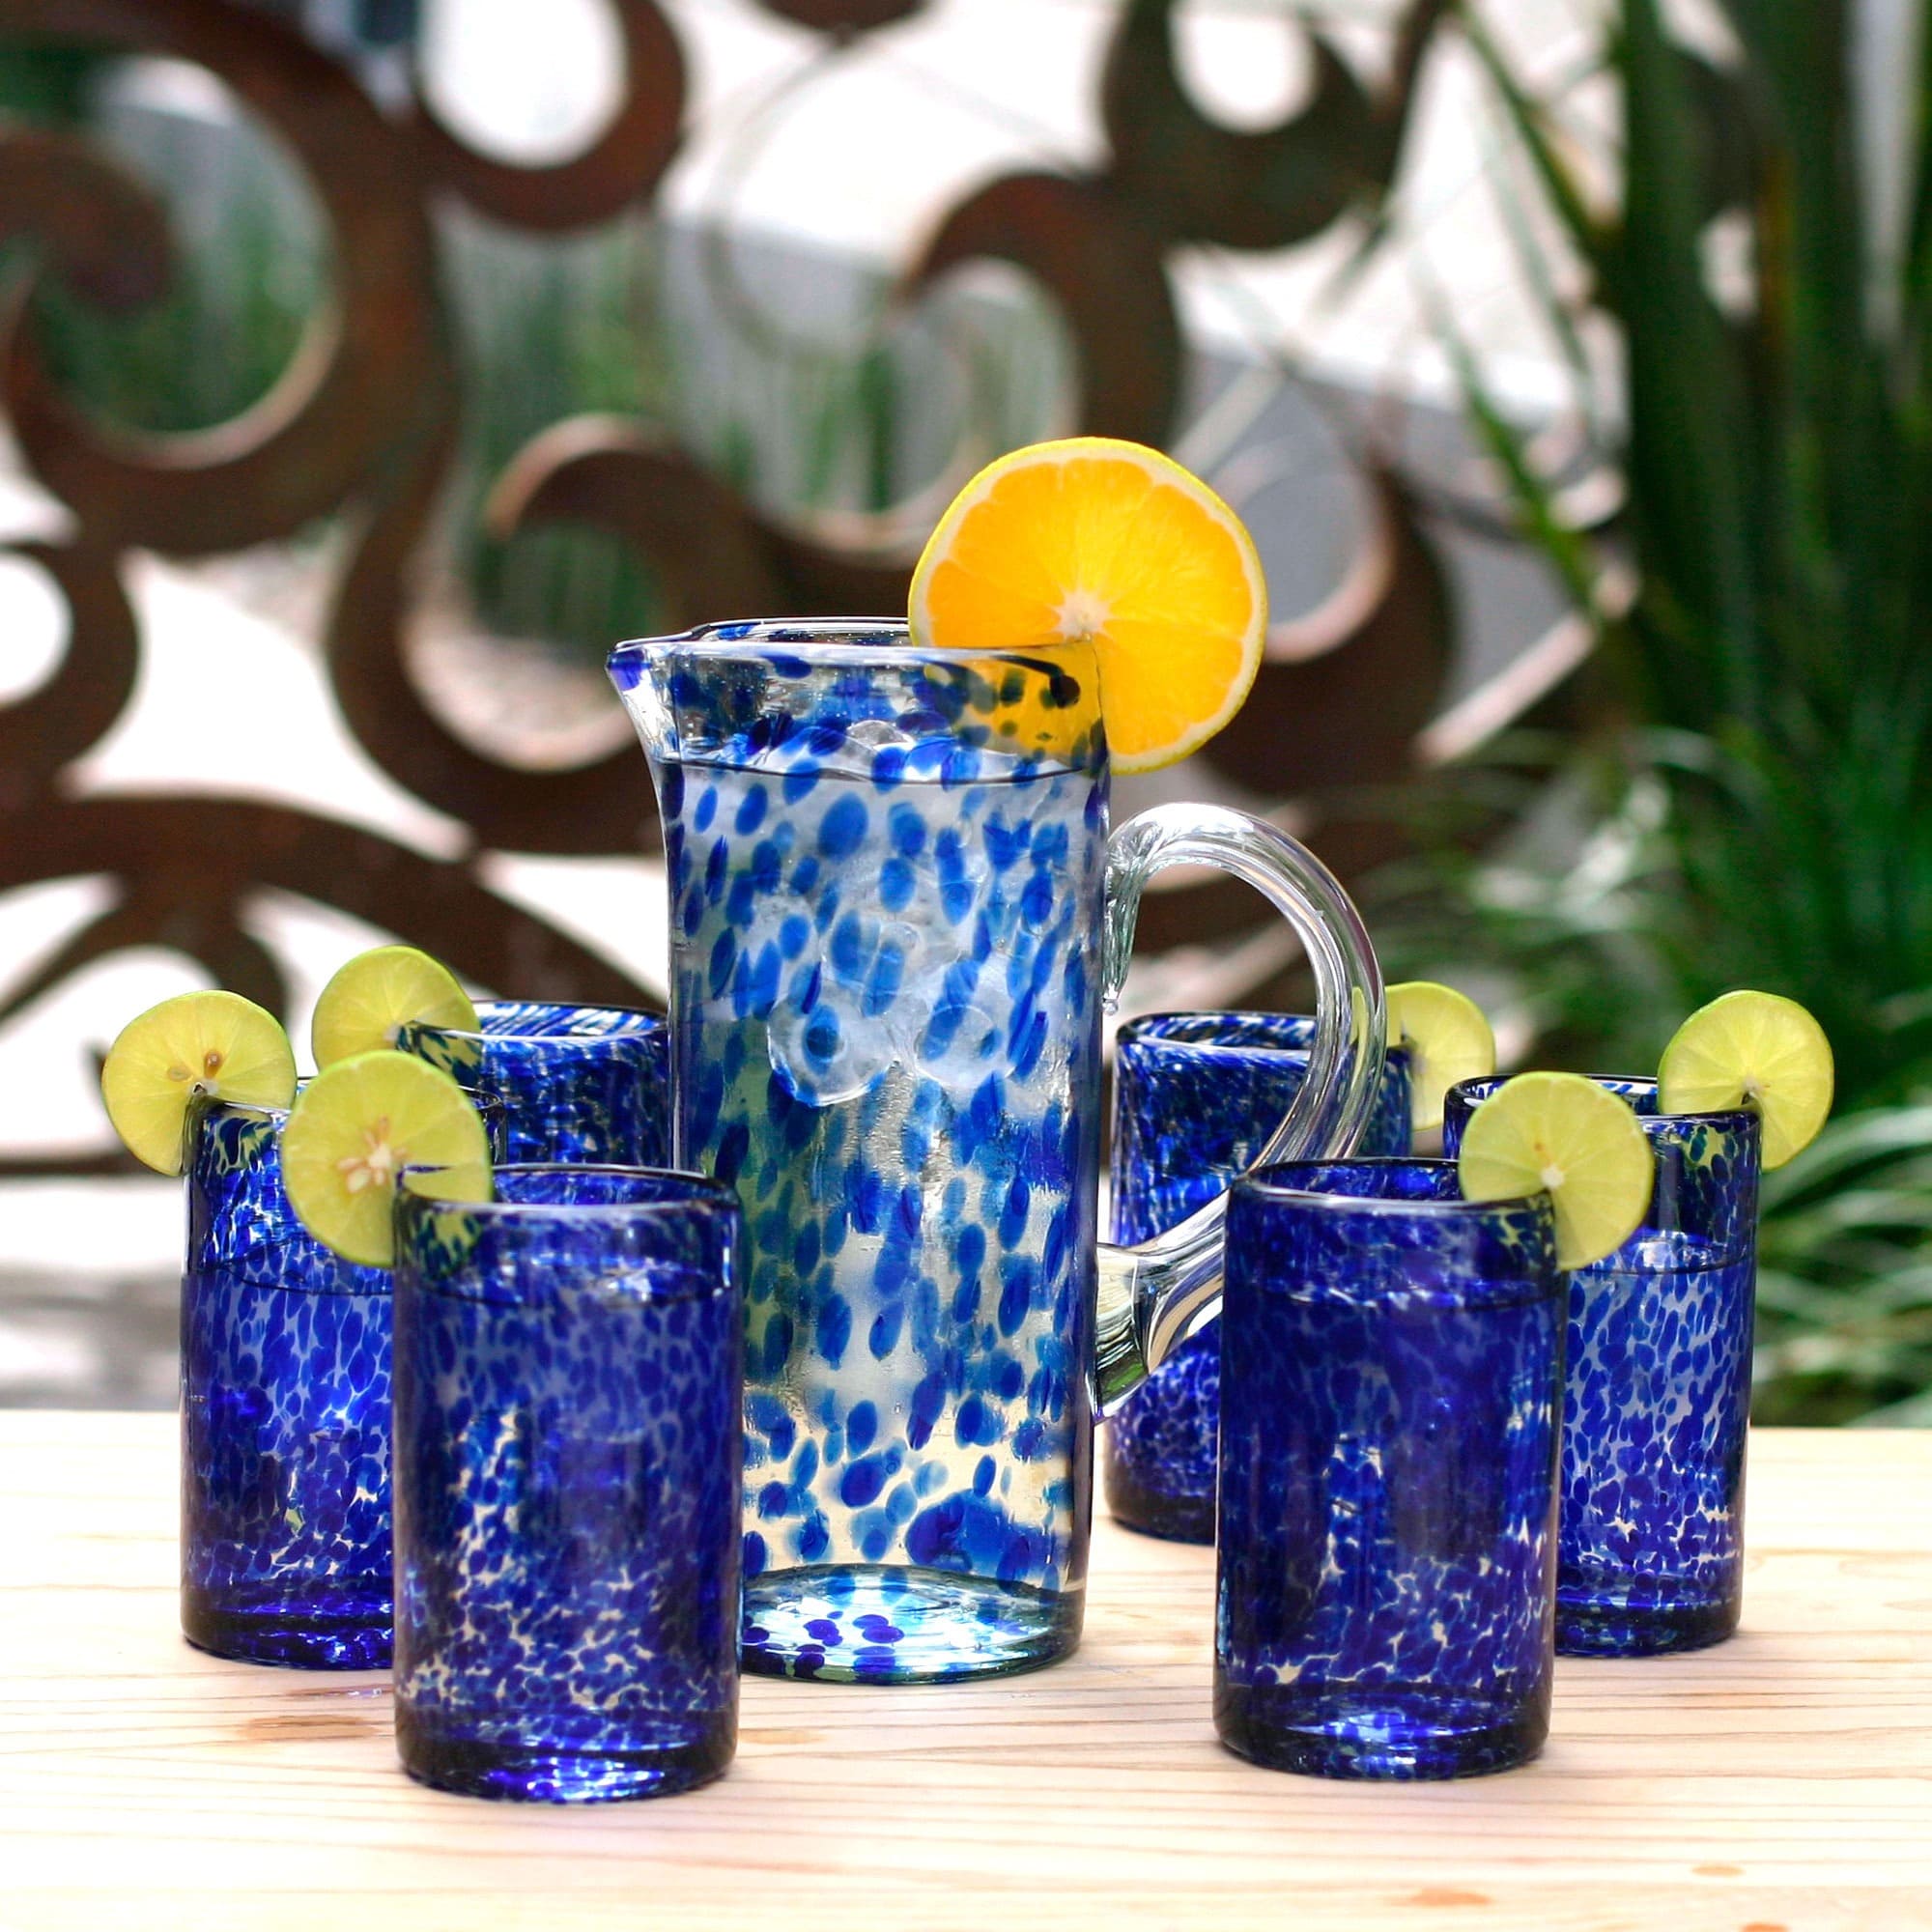 NOVICA Hand Blown Blue Rim Recycled Glass Juice Glasses 10 oz 'Short Cobalt Groove' Set of 6